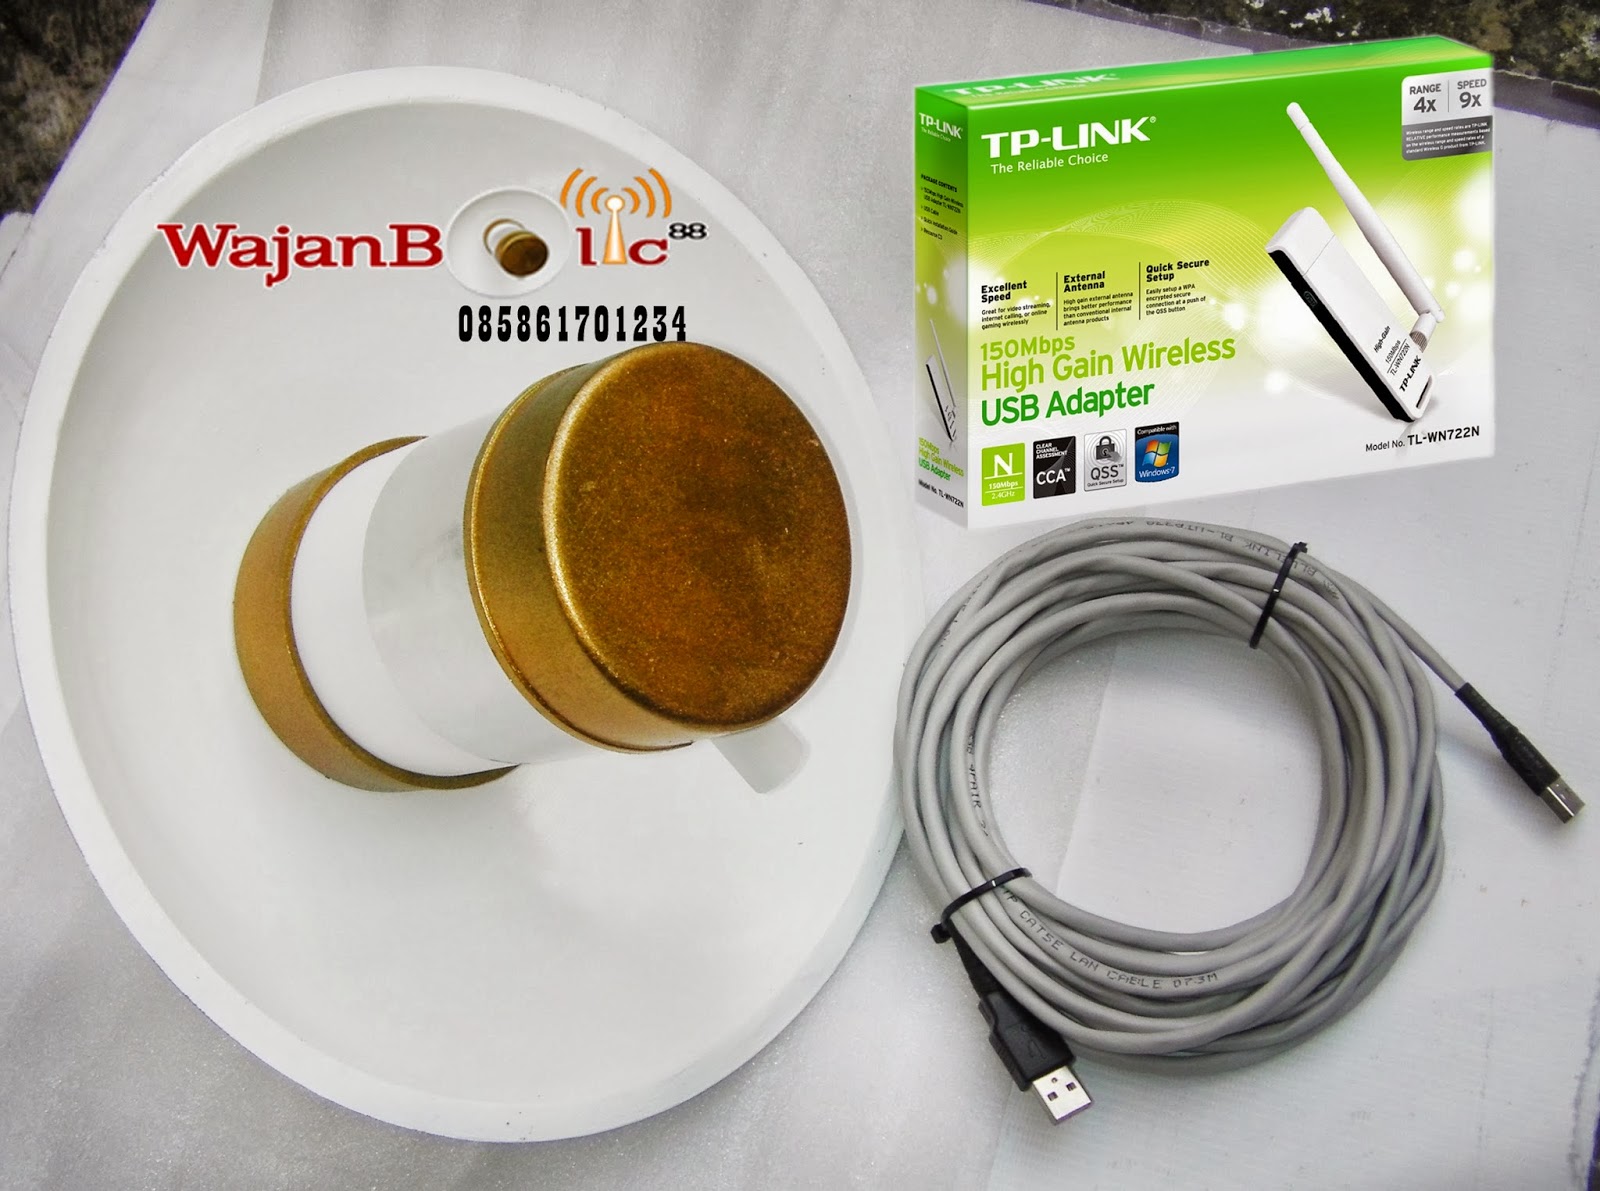 Paket Antena Wajan Bolic Ultimate Usb Wifi 150mbps WajanBolic88